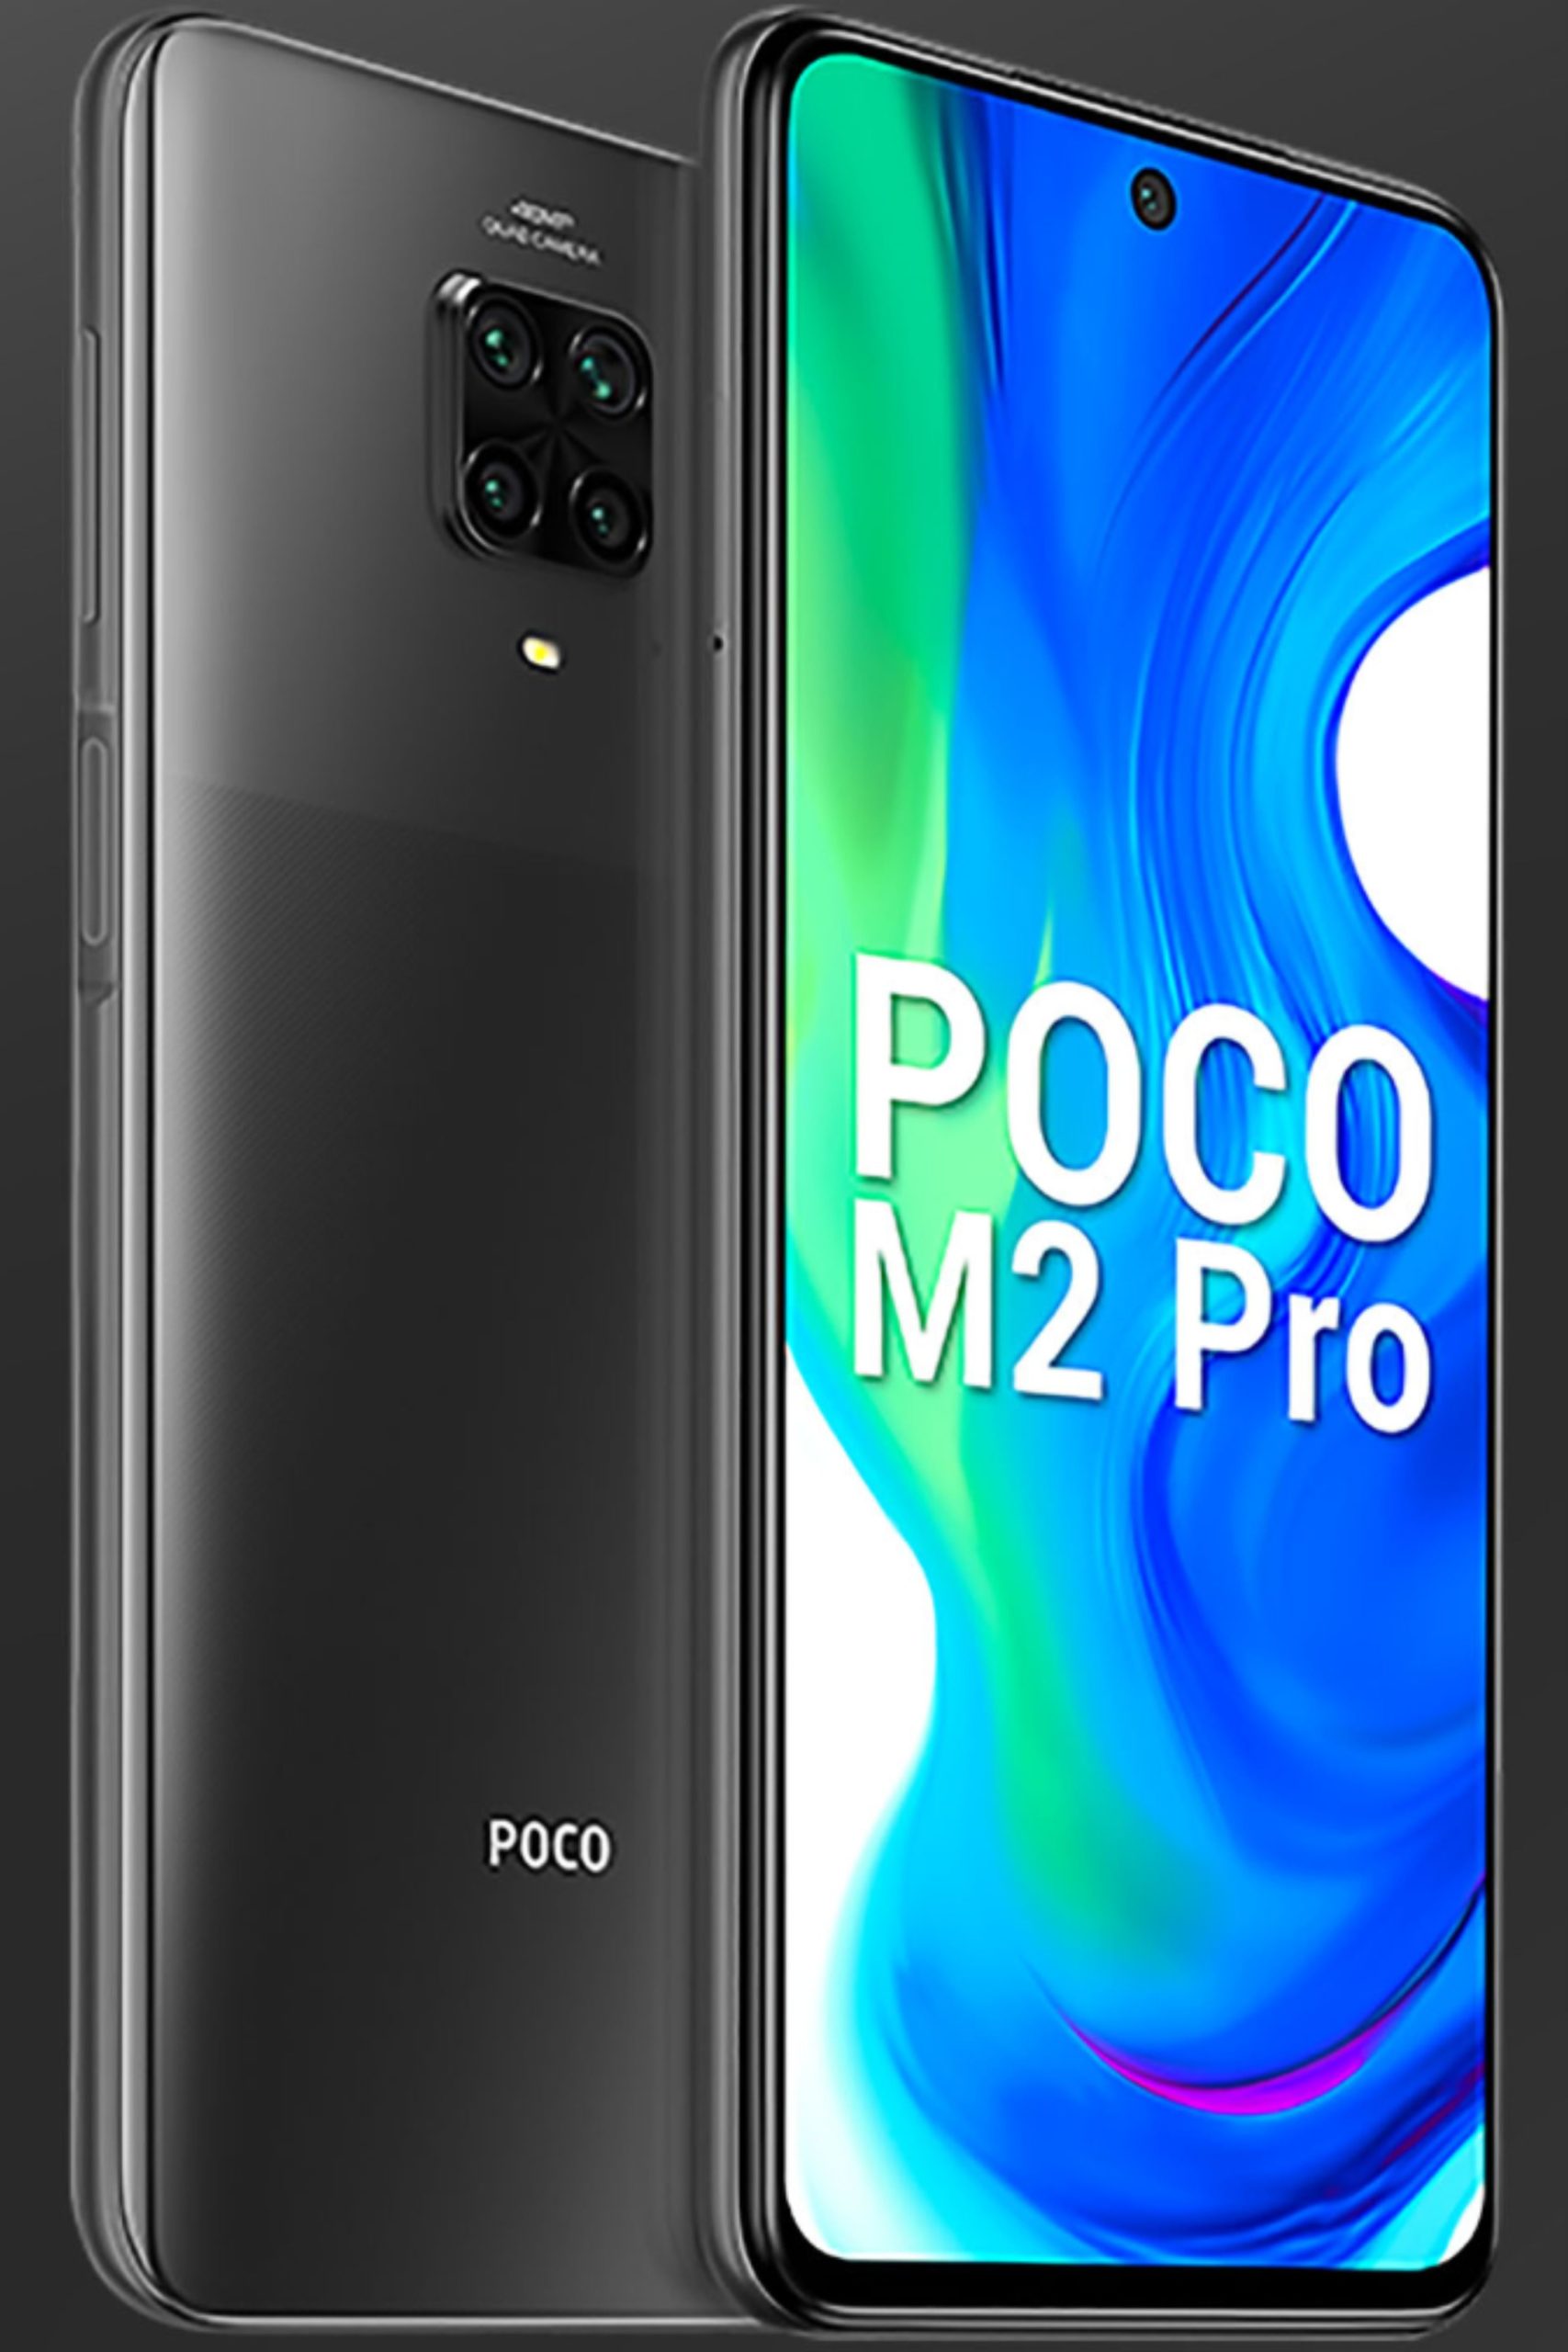 Poco M2 Pro 06 Mobilespecification8 Scaled